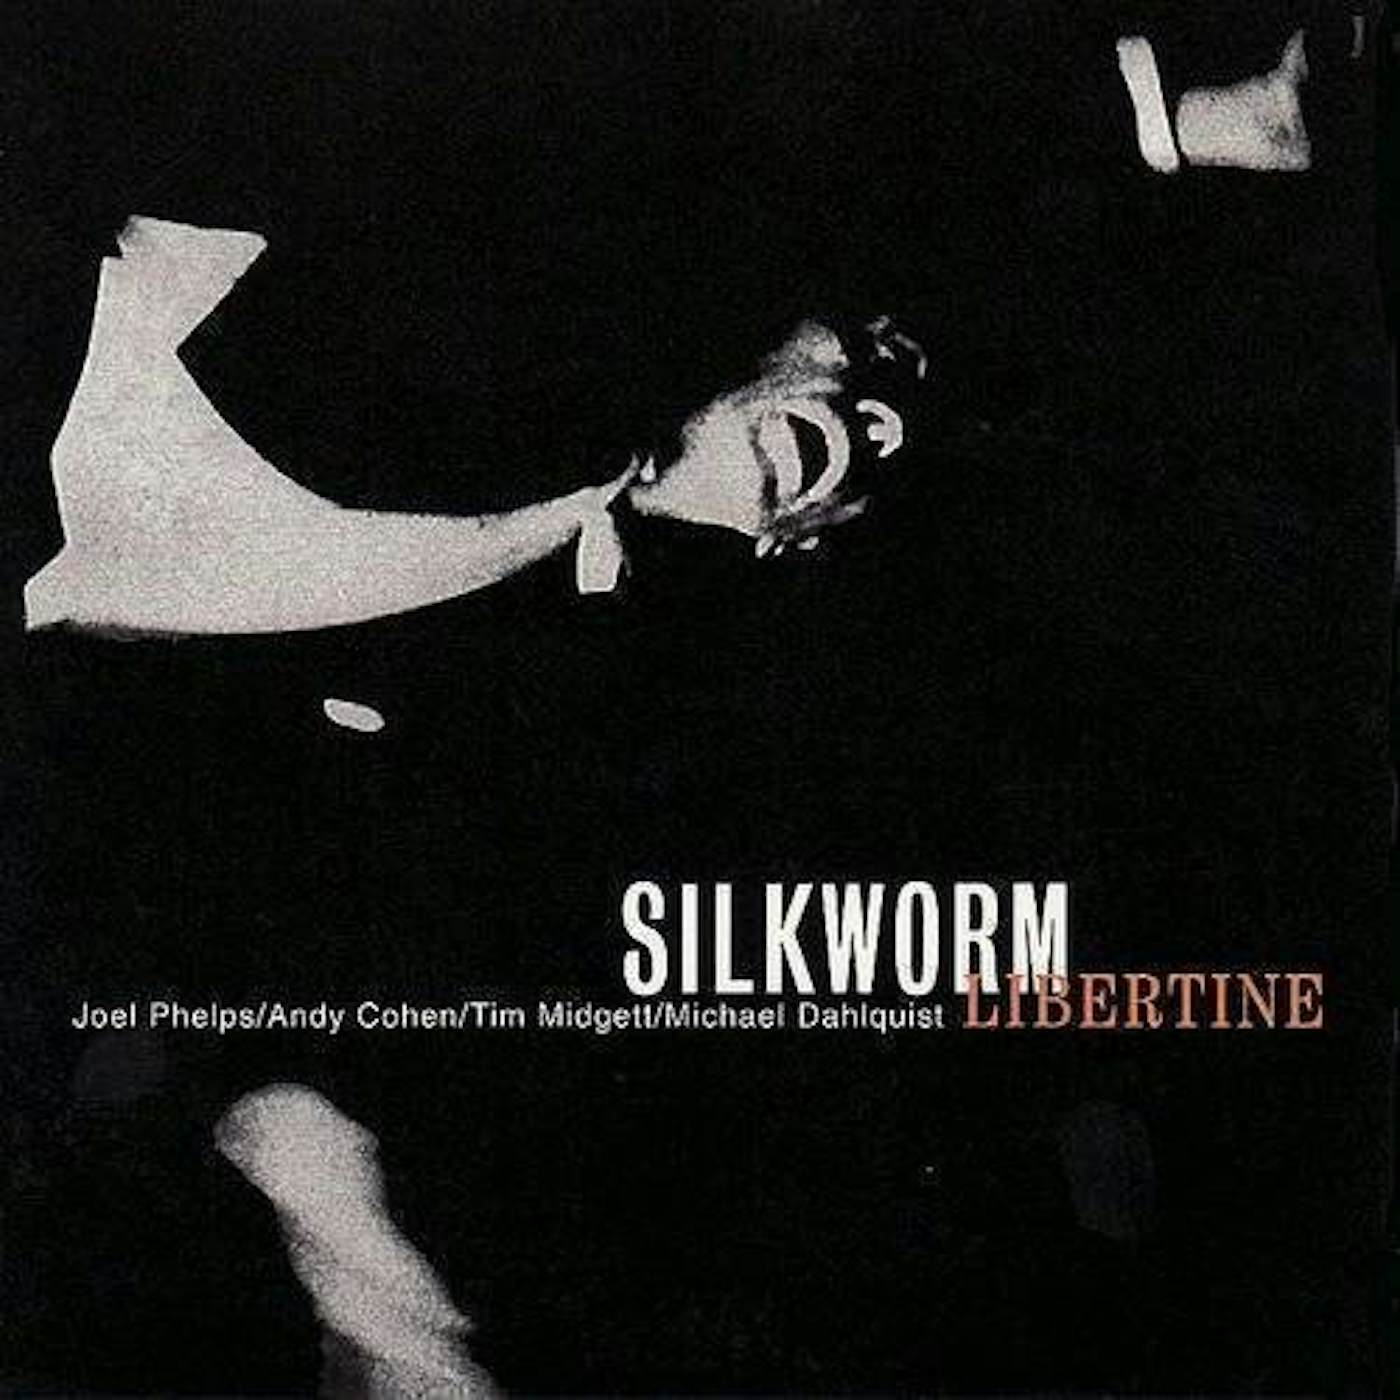 Silkworm Libertine Vinyl Record